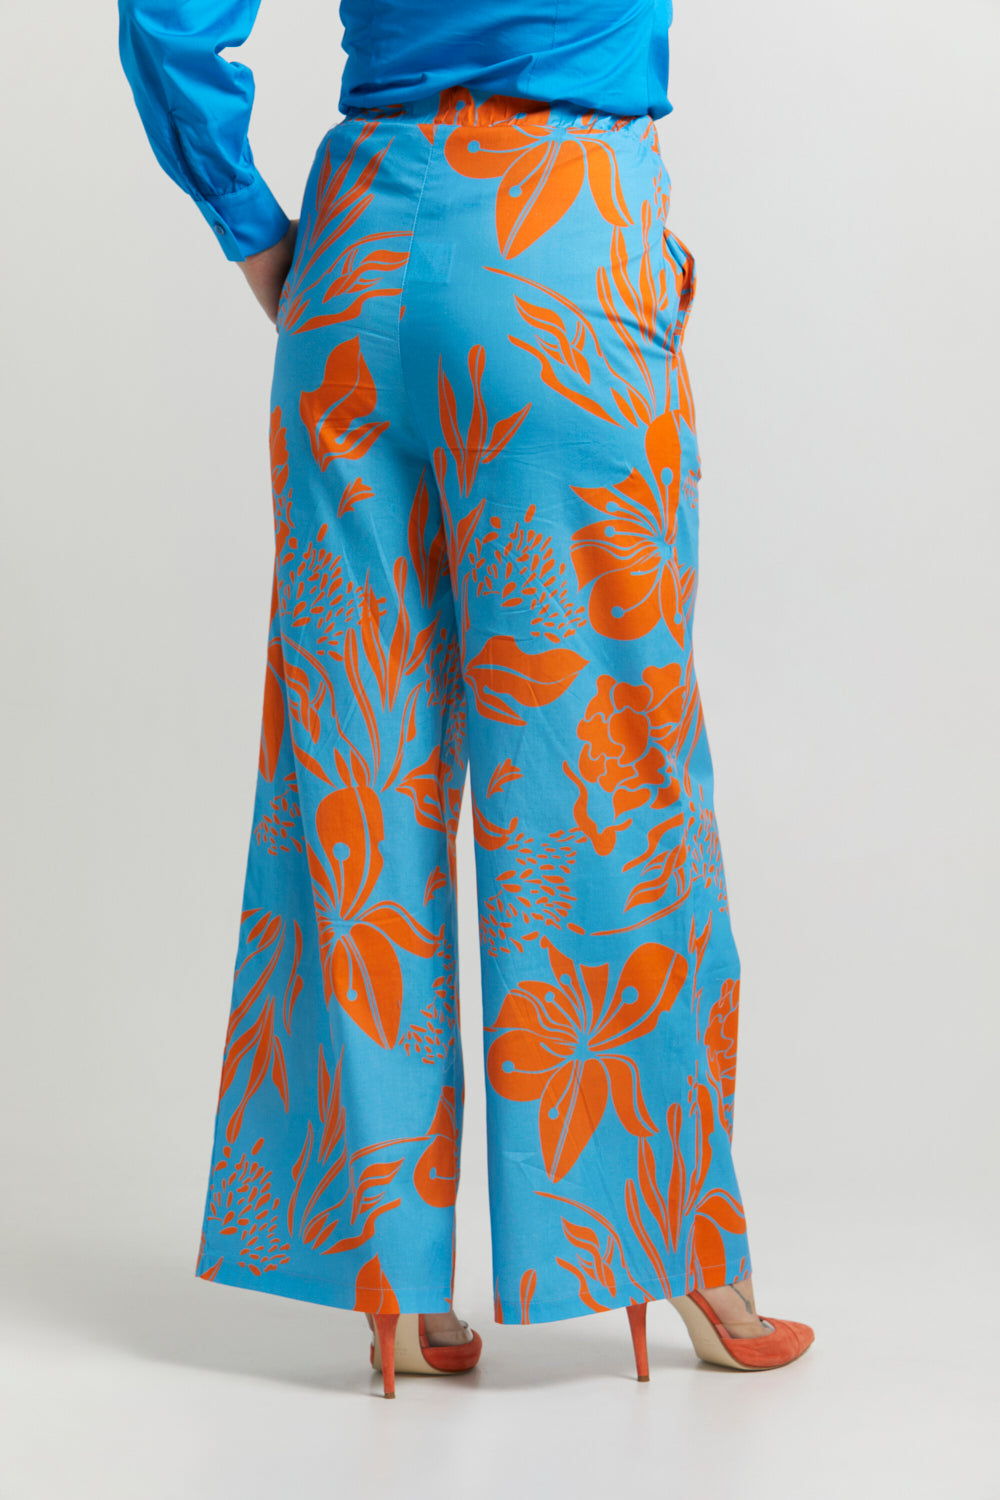 Capri Blue & Orange Floral Cotton Palazzo Pants Italian Fashion Clothing —  Shops From Italy